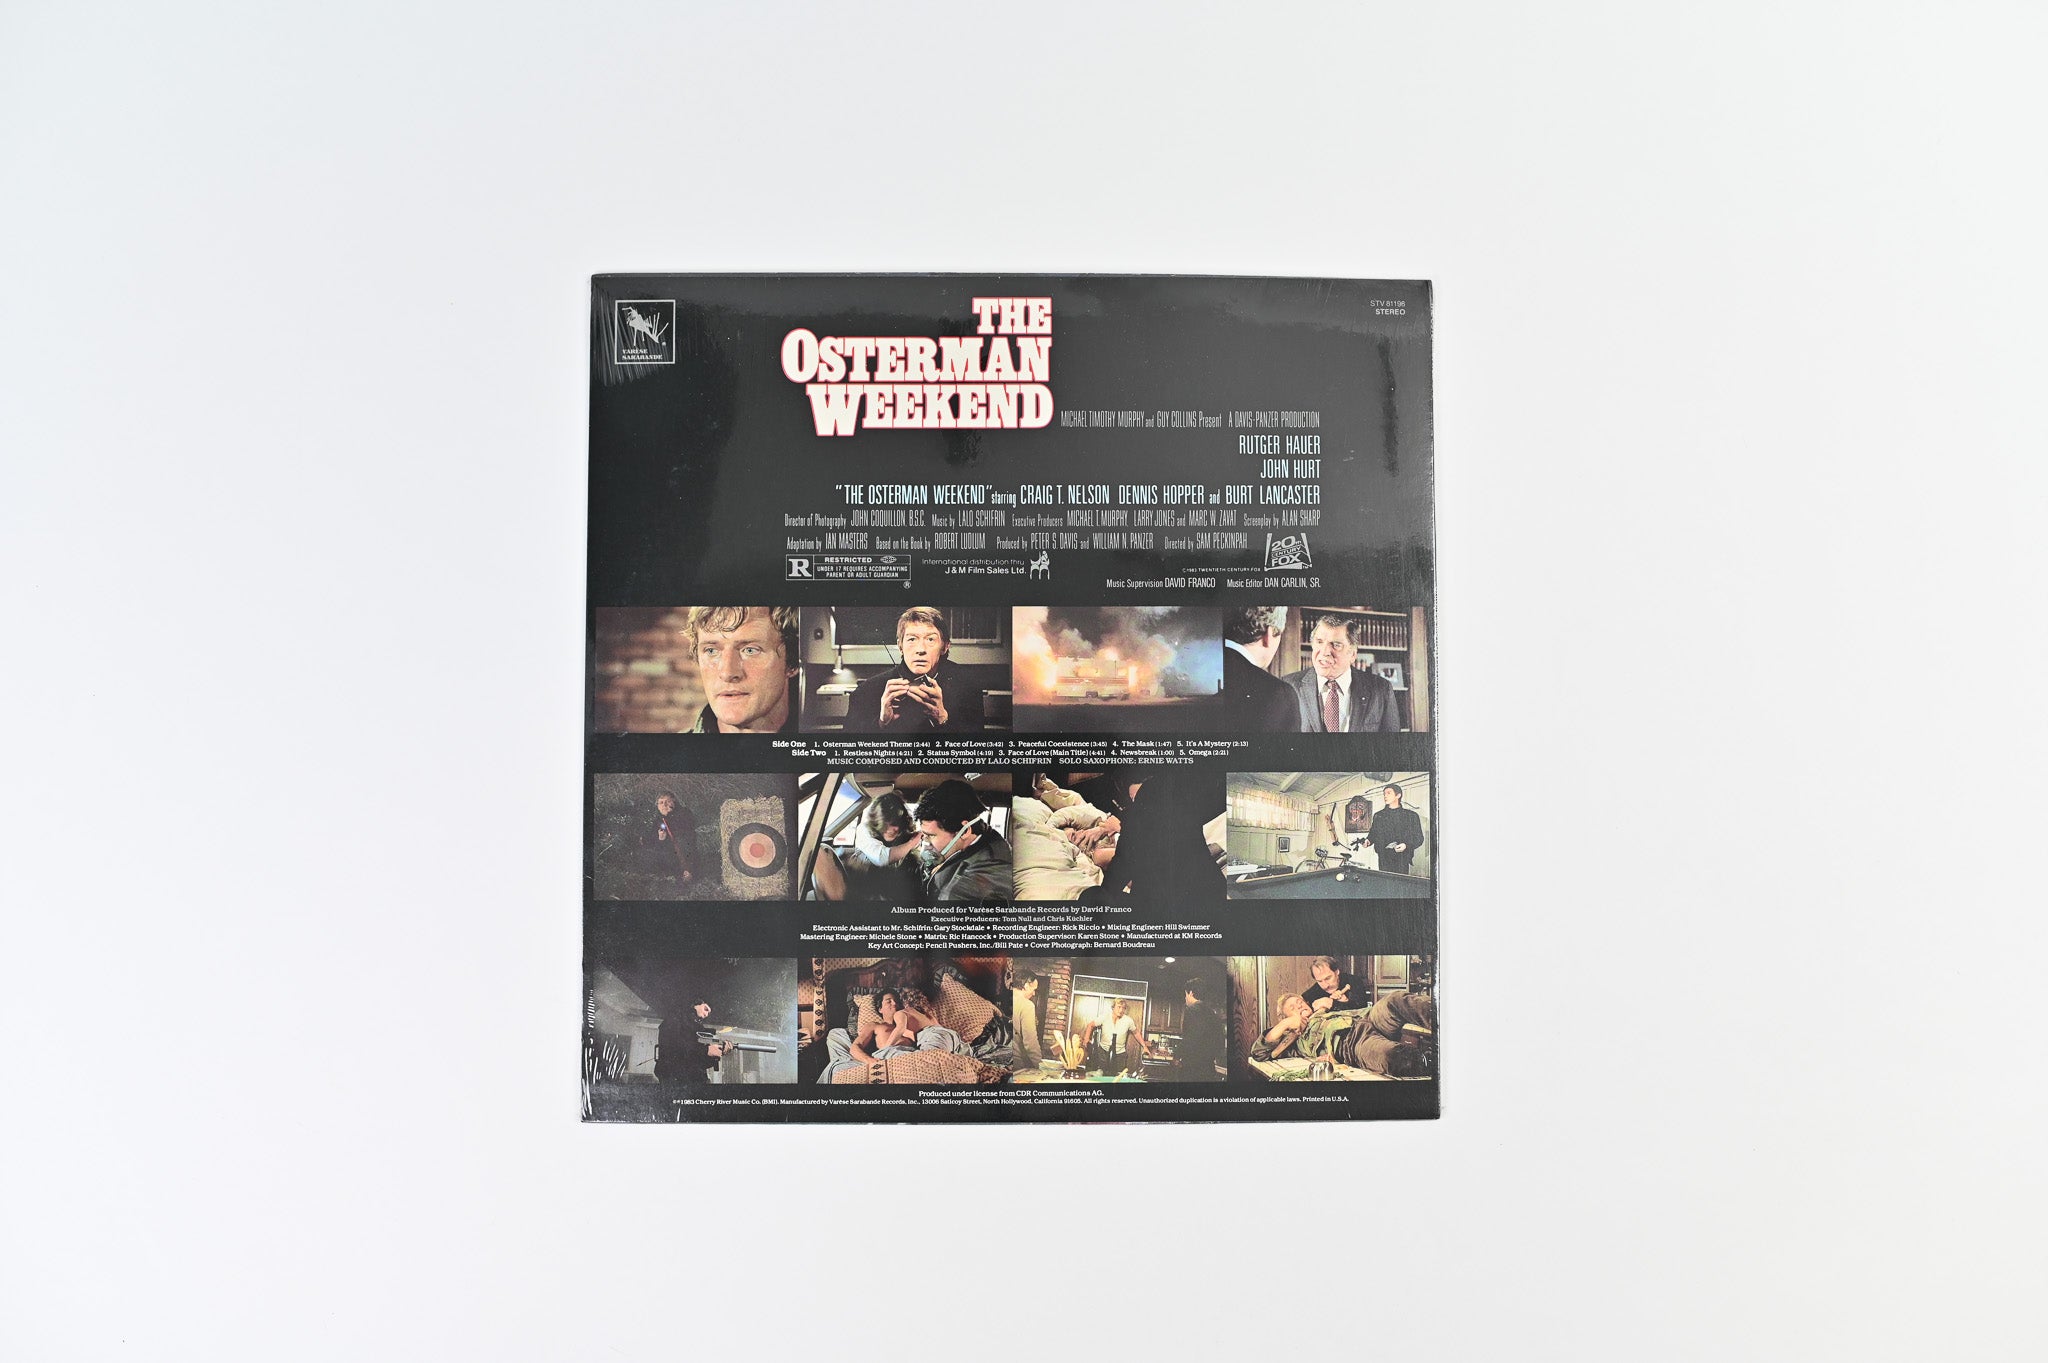 Lalo Schifrin - The Osterman Weekend Soundtrack on Varese Sarabande Sealed